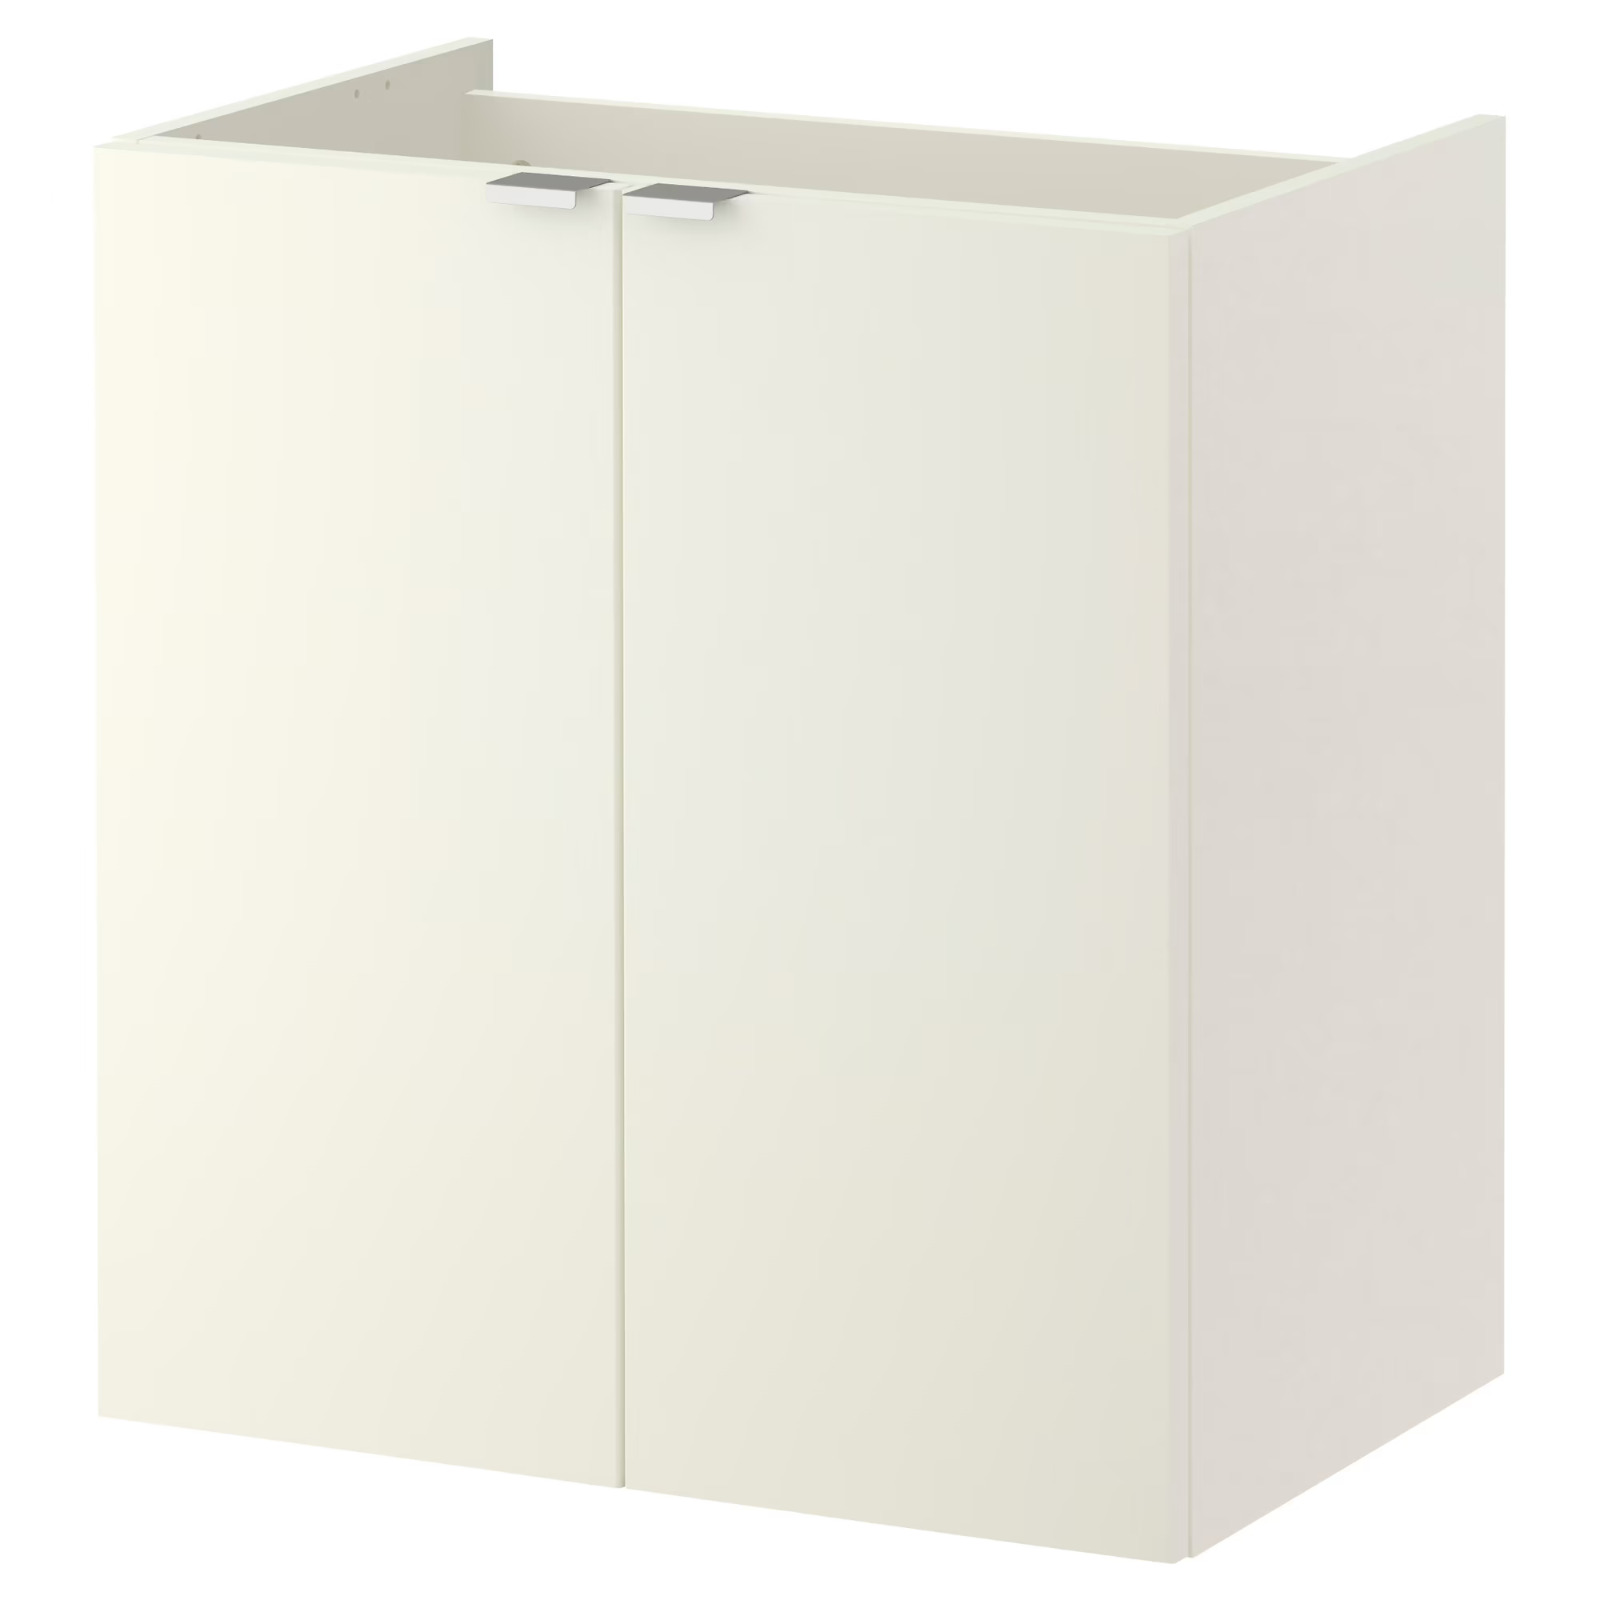 Ikea LillÅngen/lillangen White Minimal/modern Sink Cabinet With 2 Doors | New